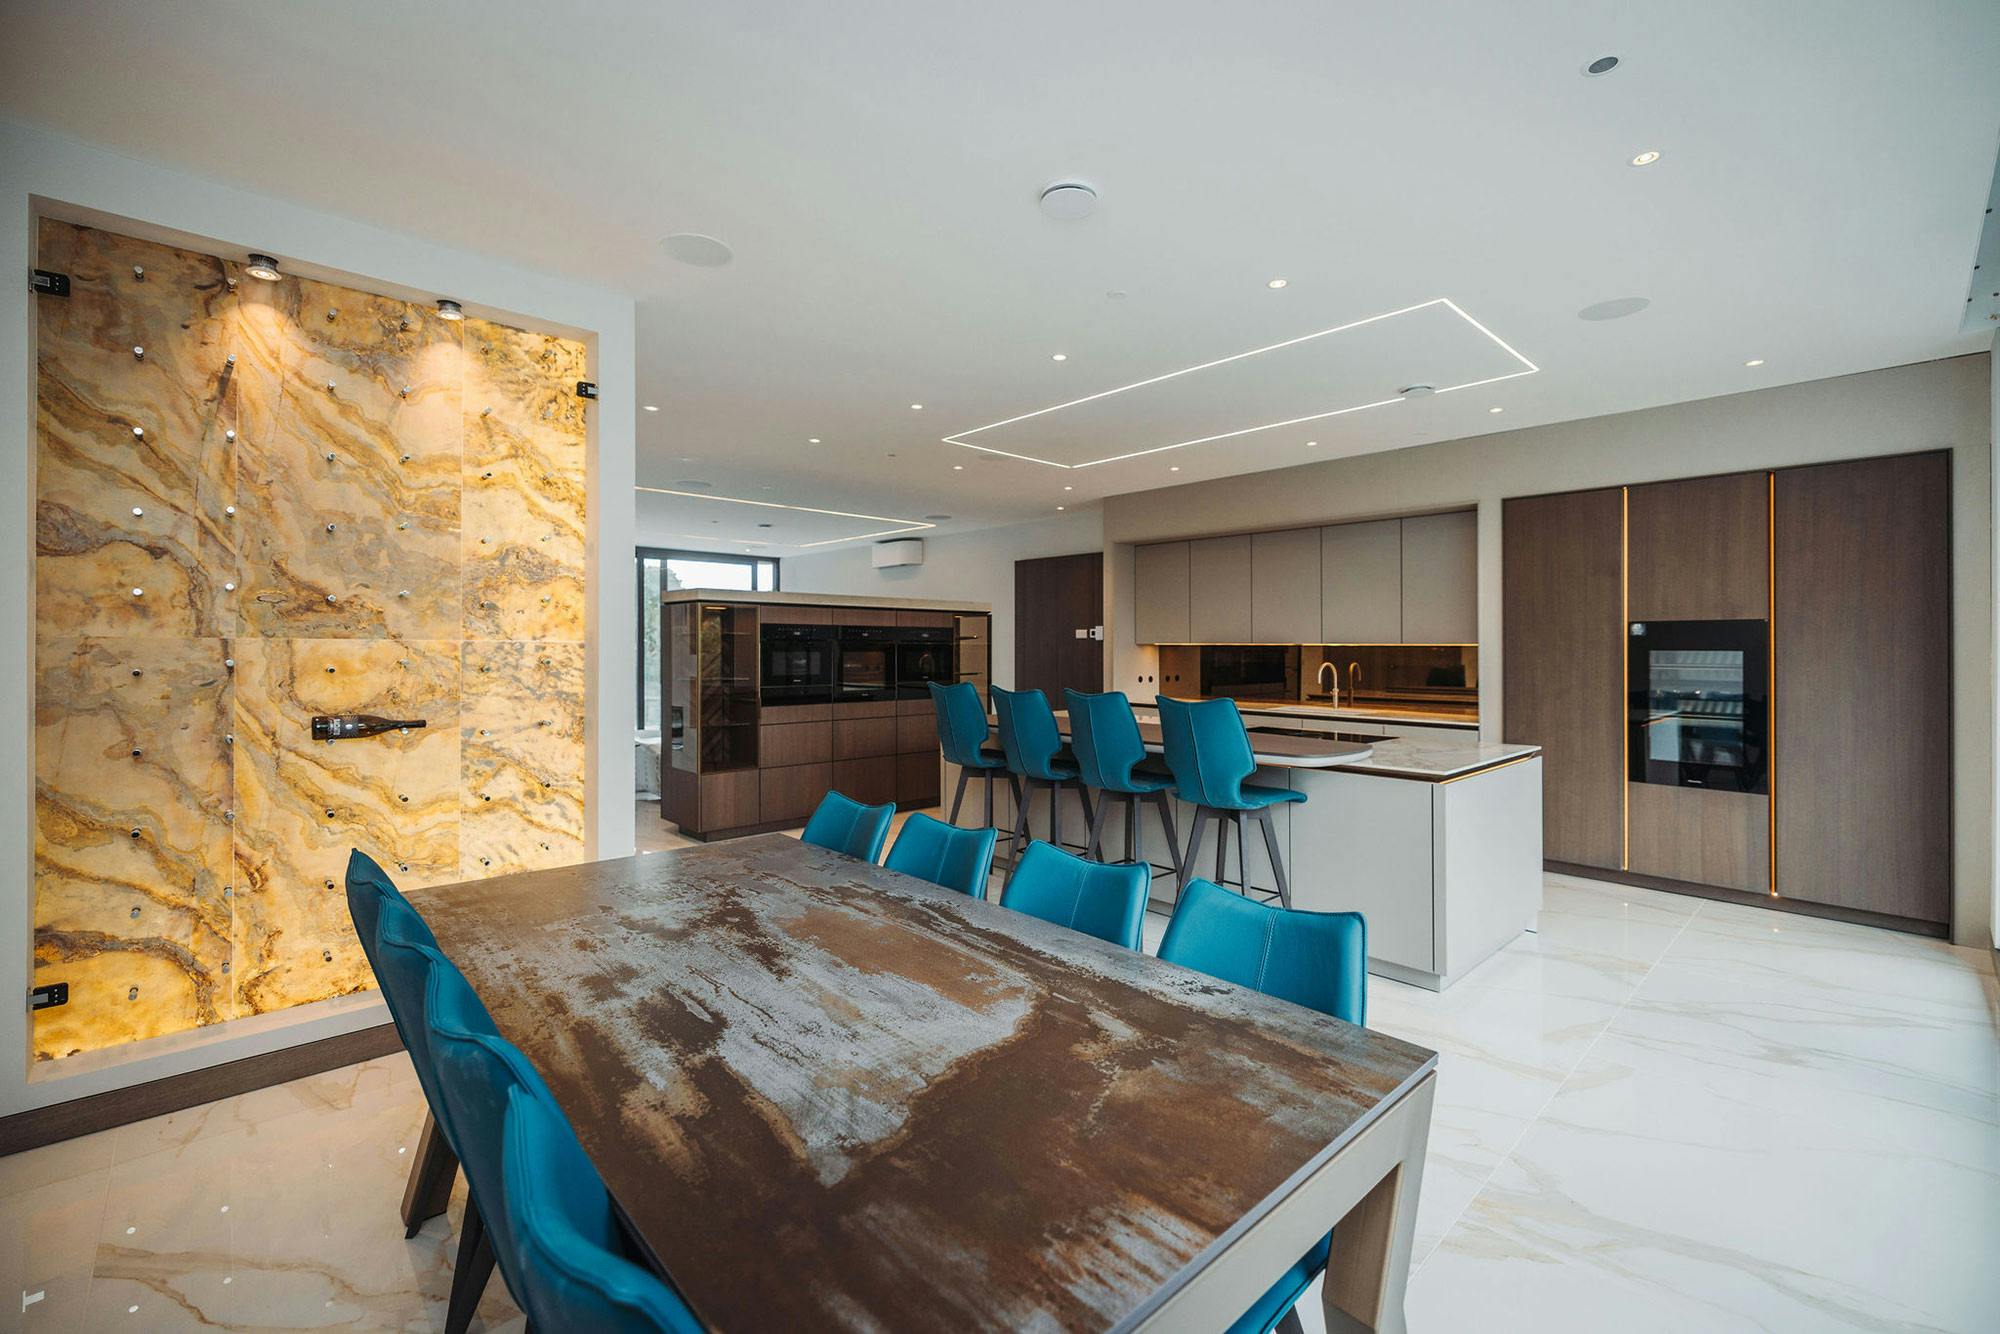 Numéro d'image 36 de la section actuelle de Oliver Goettling's futuristic kitchen: design and funcionality in limited spaces de Cosentino Canada